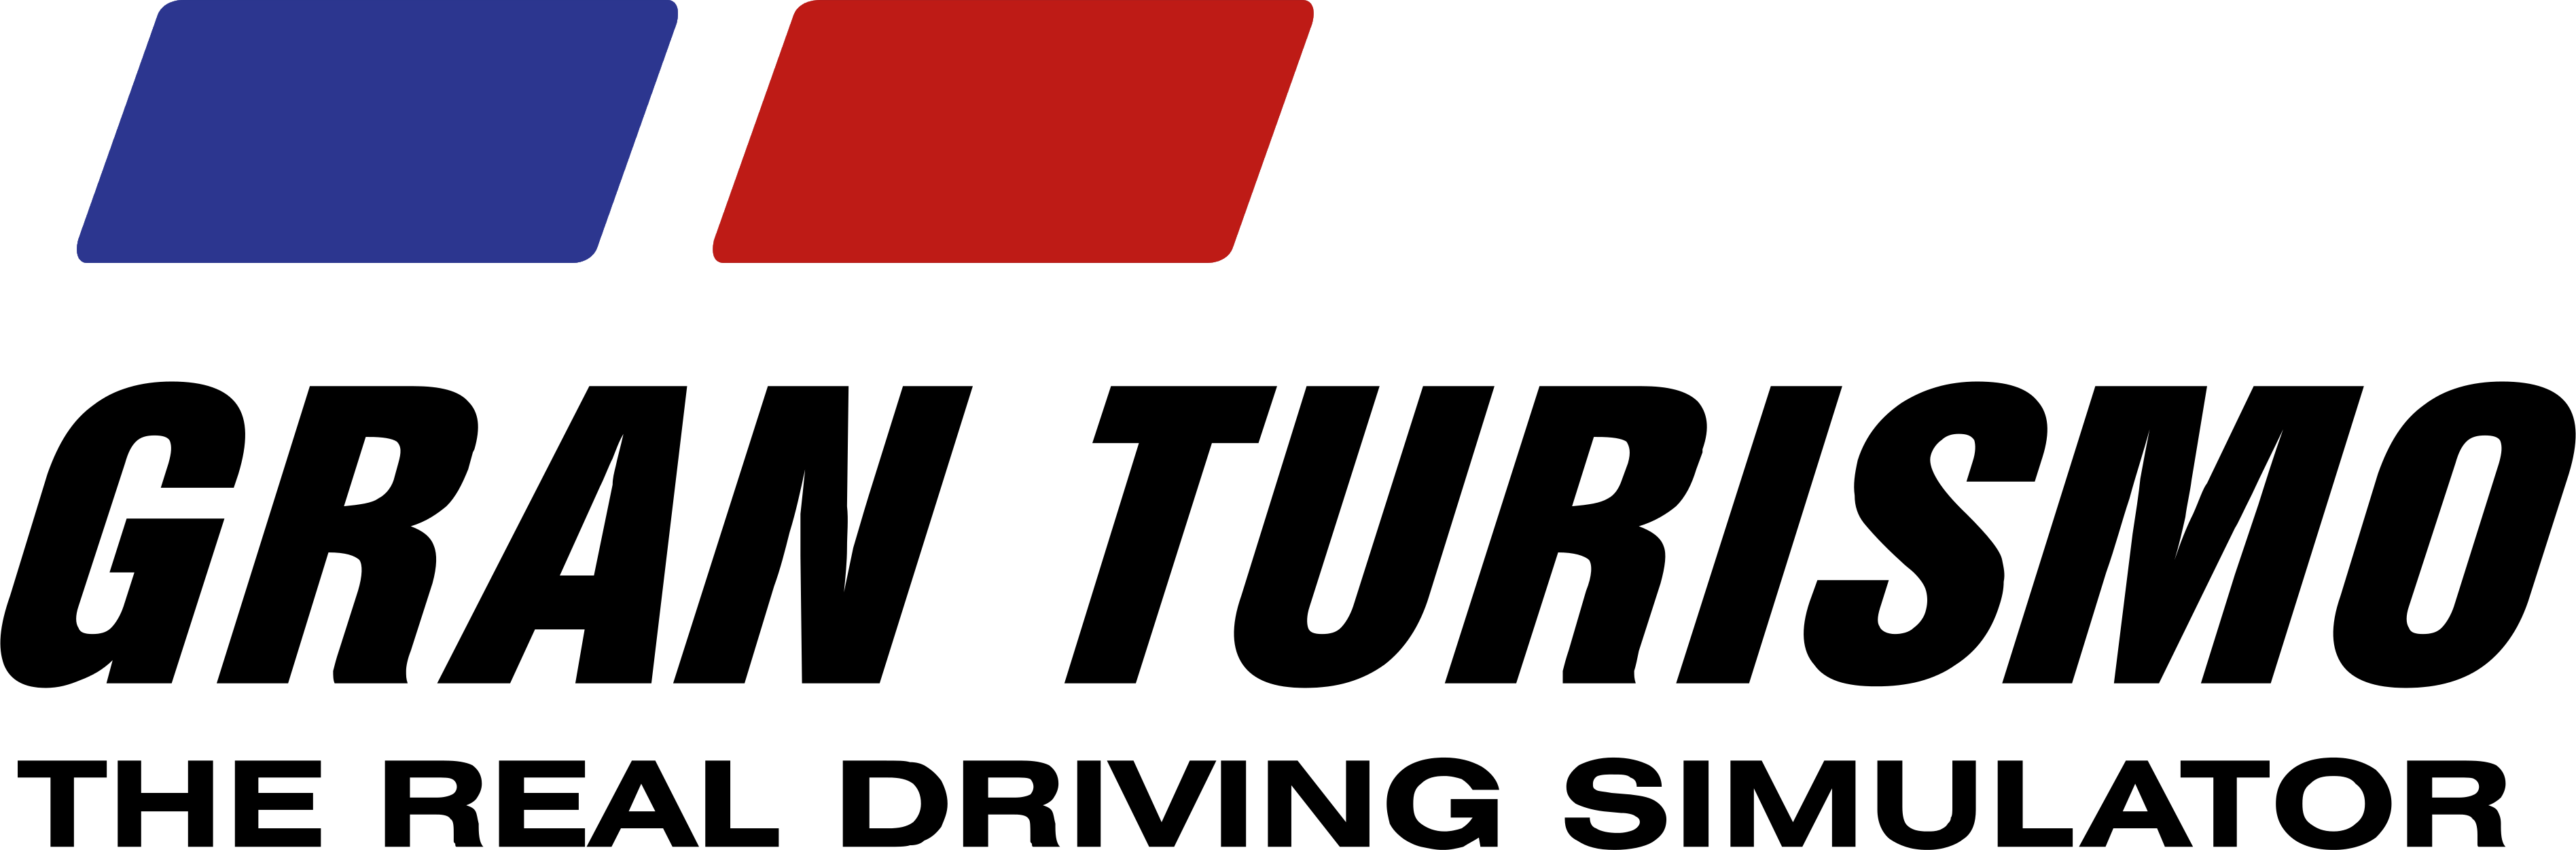 Gran Turismo Logo PNG Pic Background